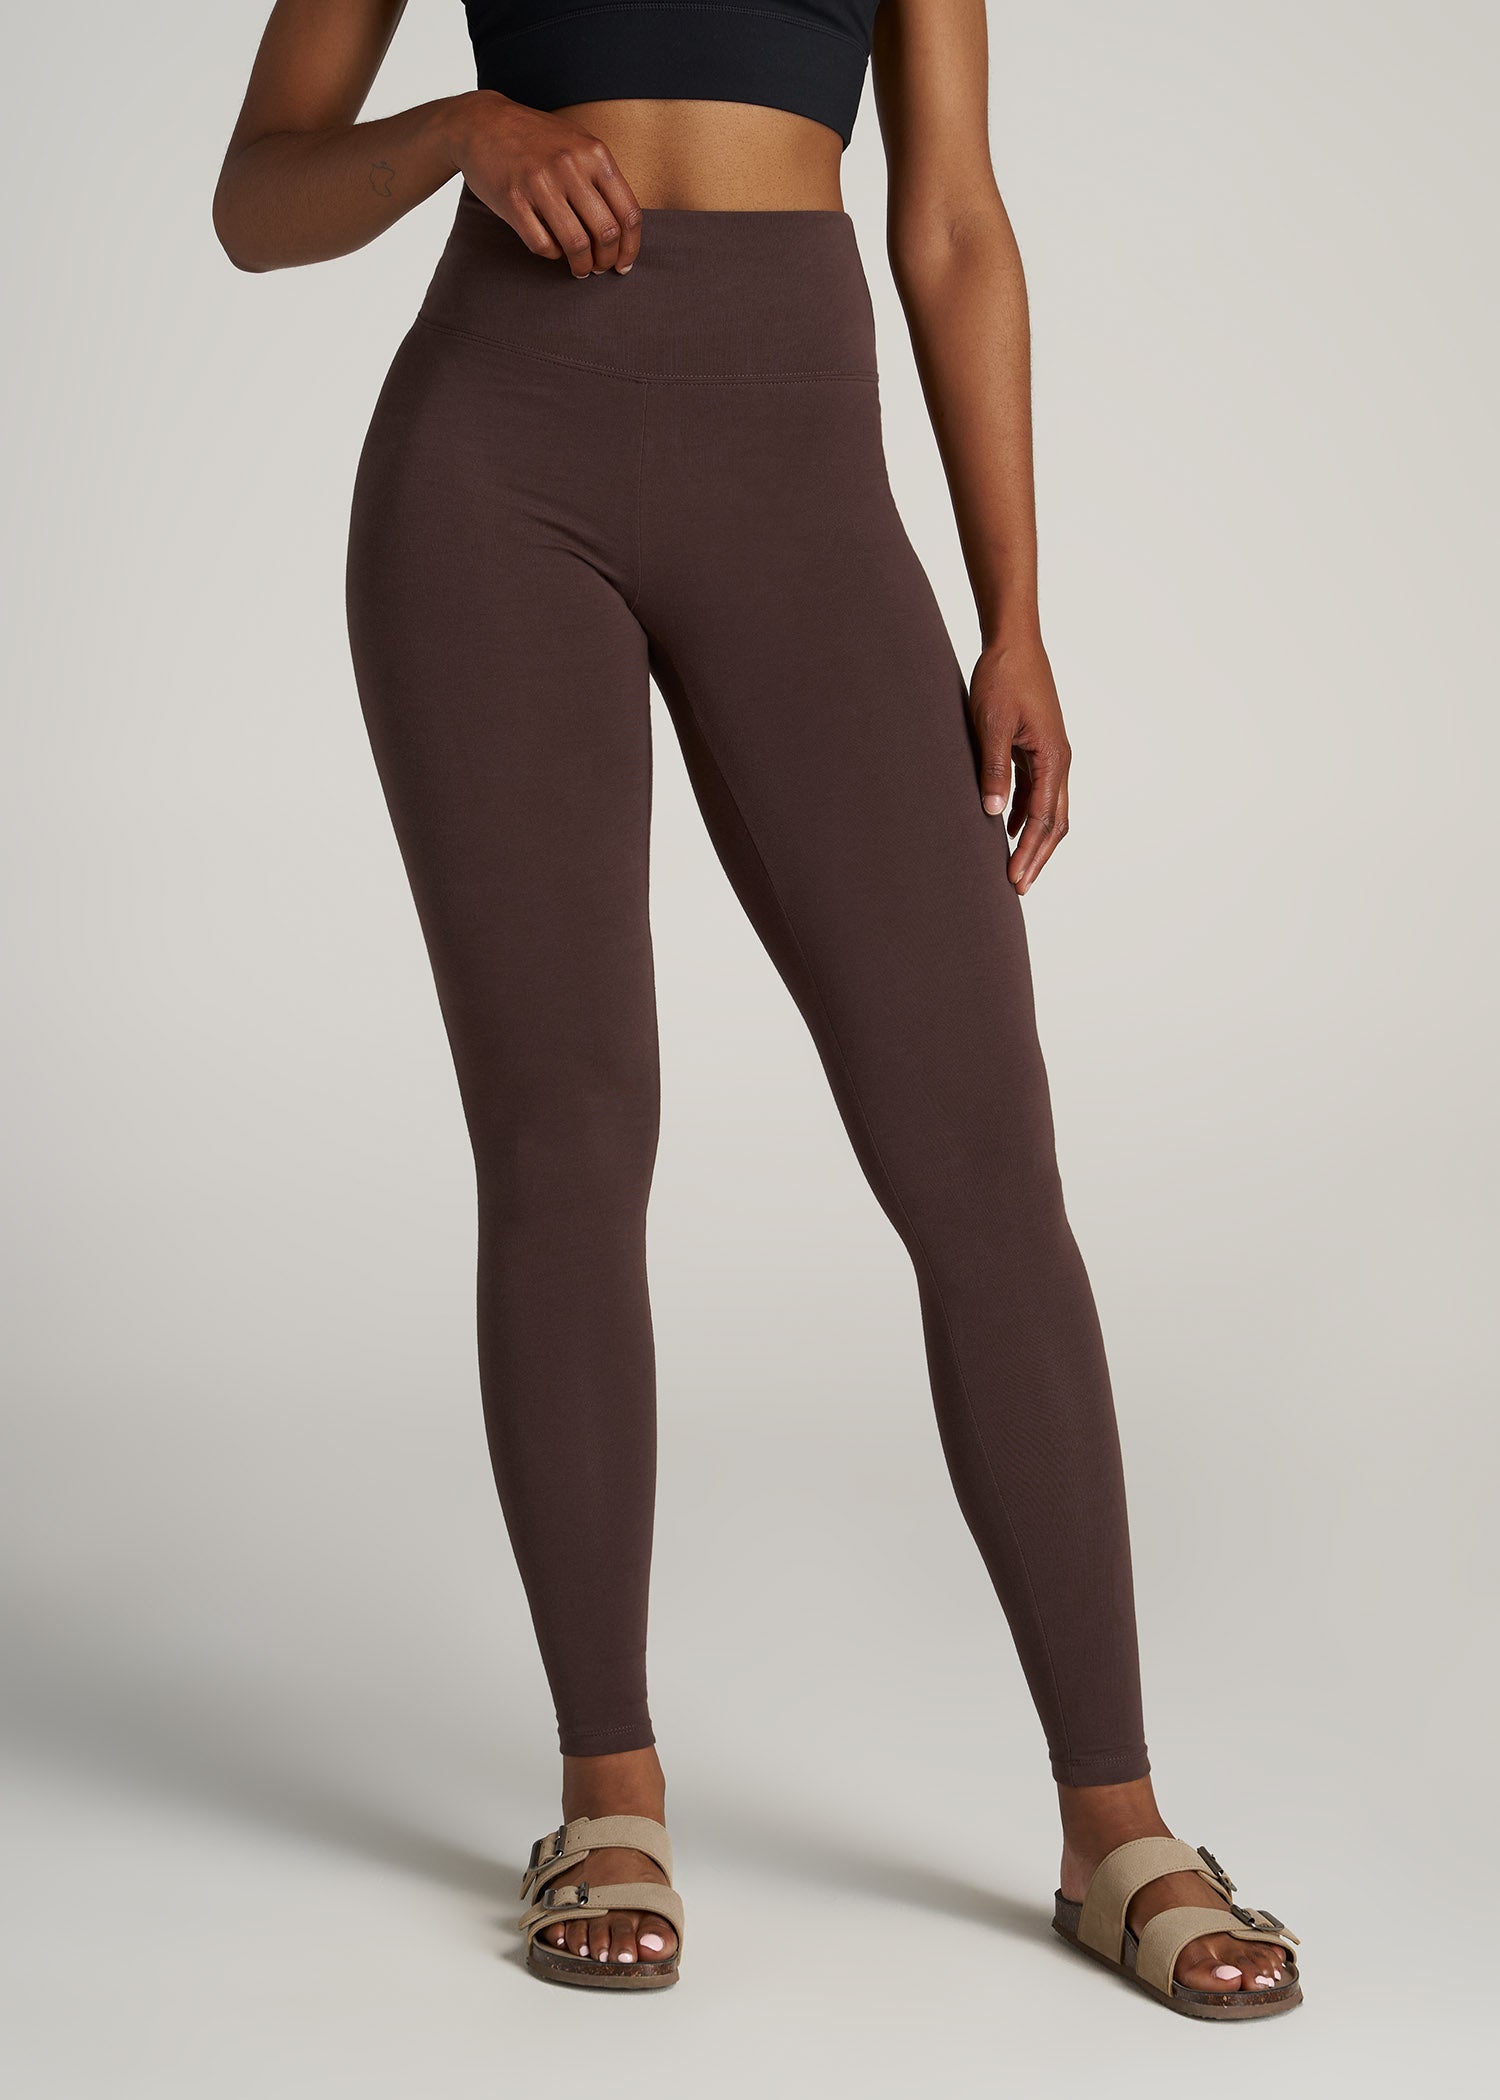 Cotton Spandex 32 Inseam Full Length Leggings Women Size S - 5XL 30 Colors  USA